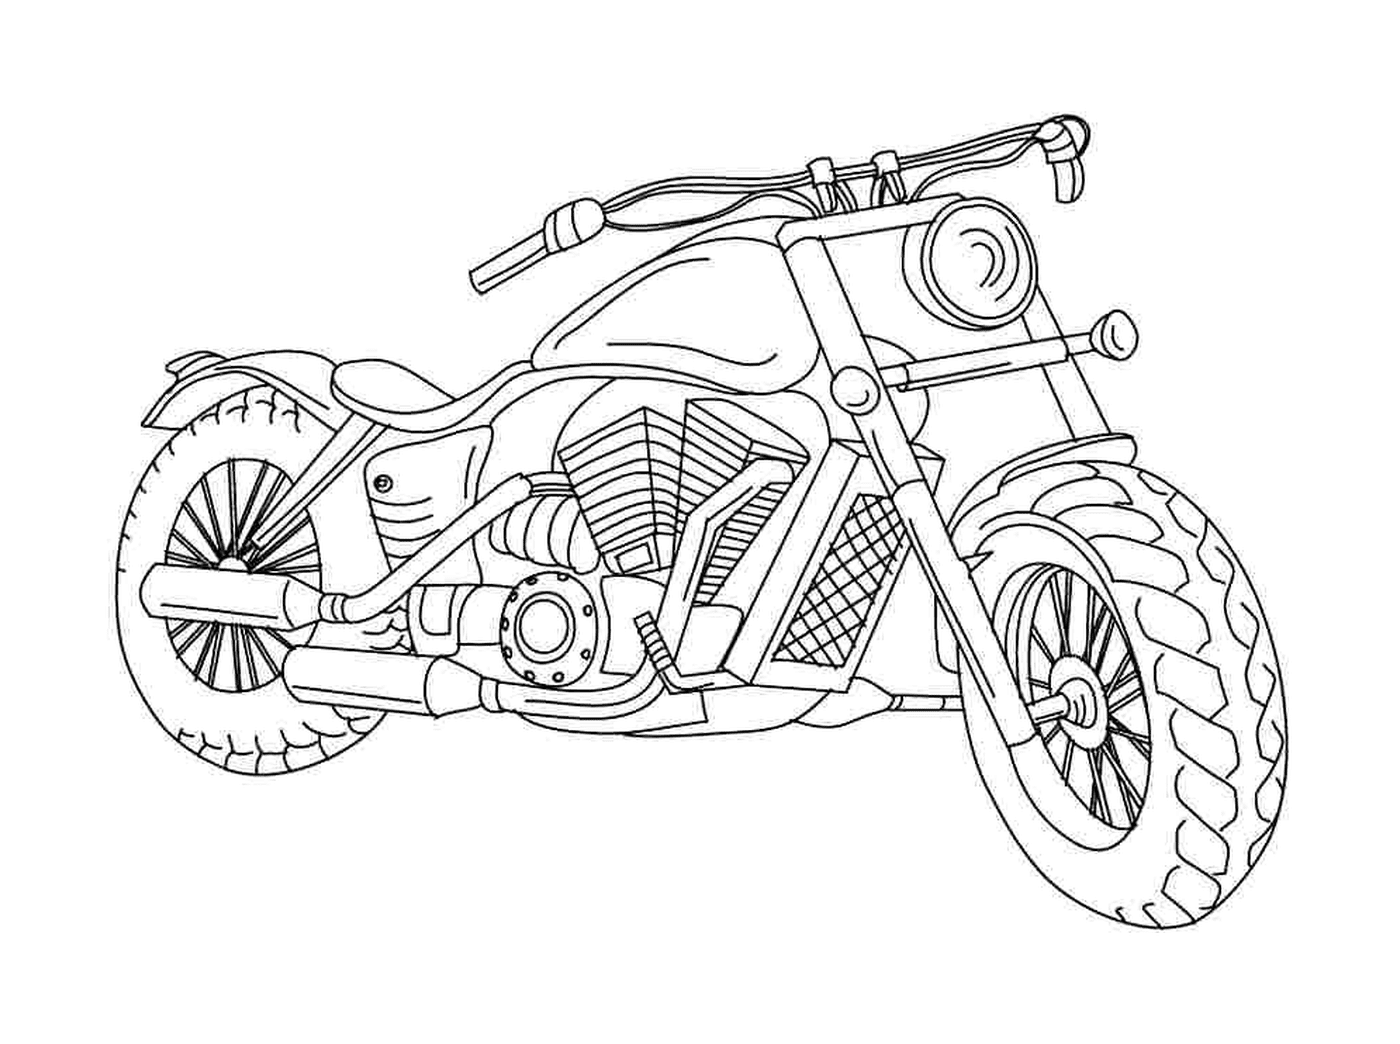  Motorcycle number 42 